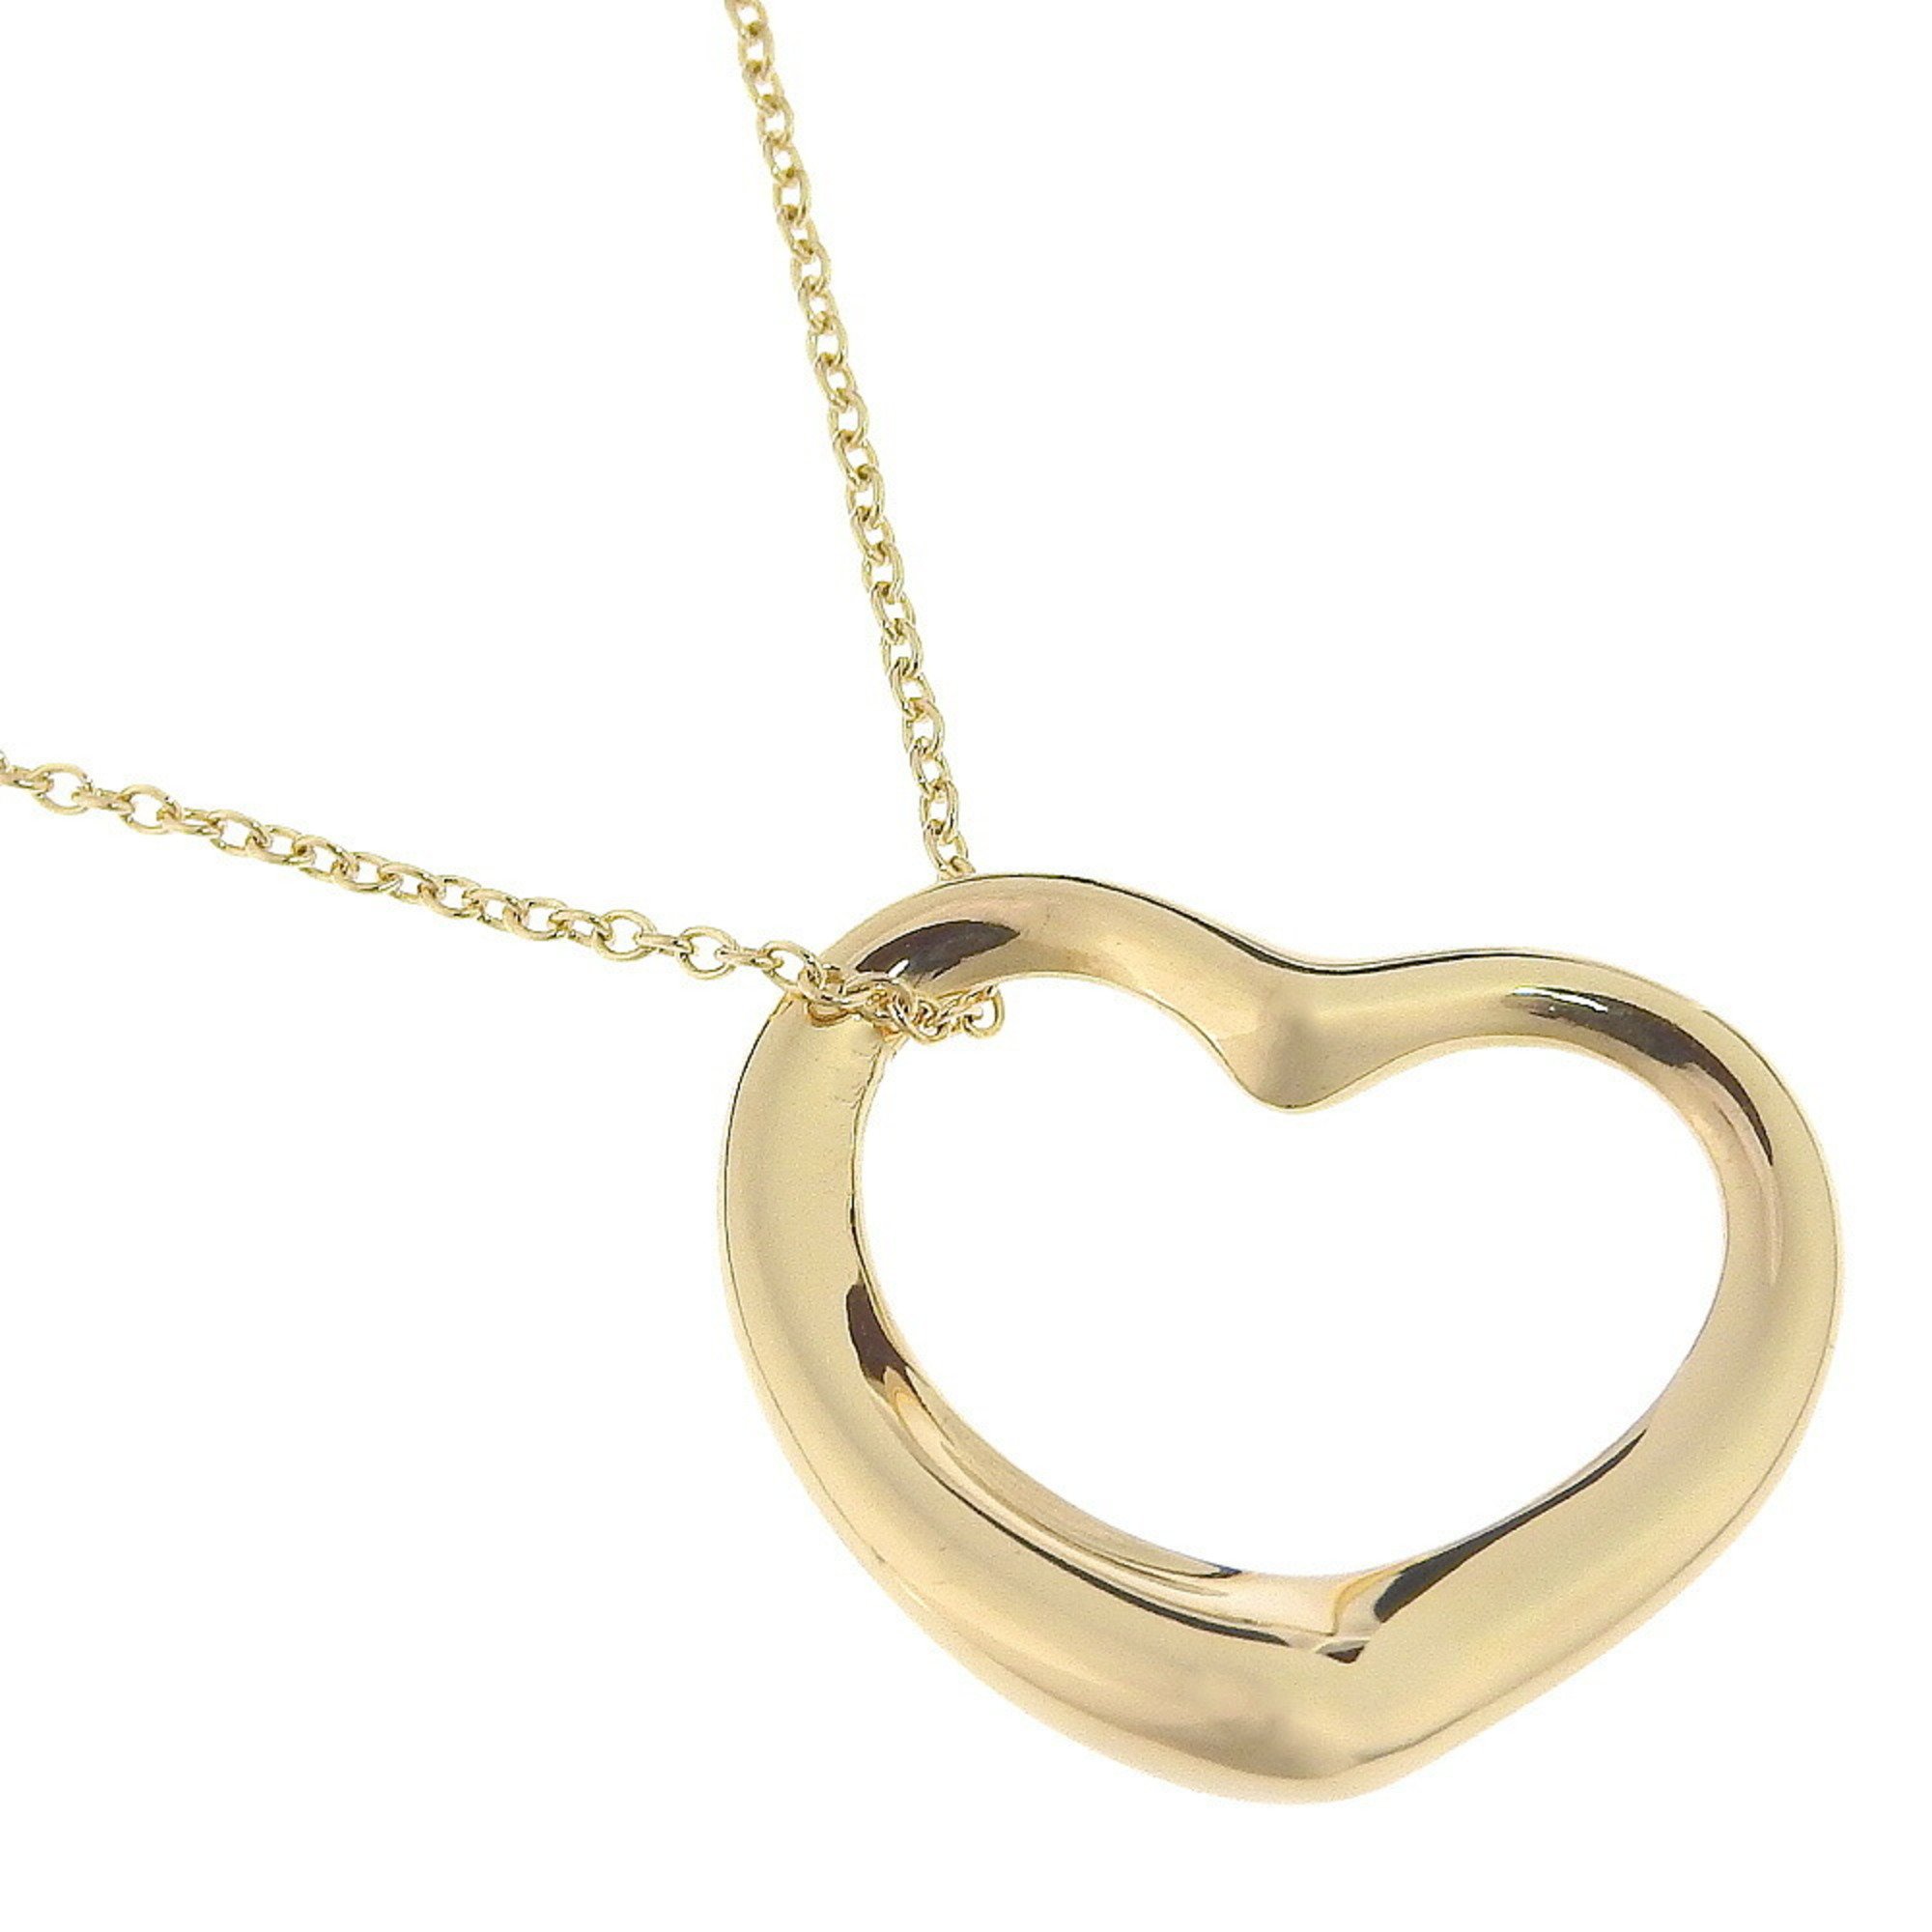 Tiffany & Co. Elsa Peretti Heart Necklace, 18K Yellow Gold, Approx. 5.3g, Open Heart, Women's